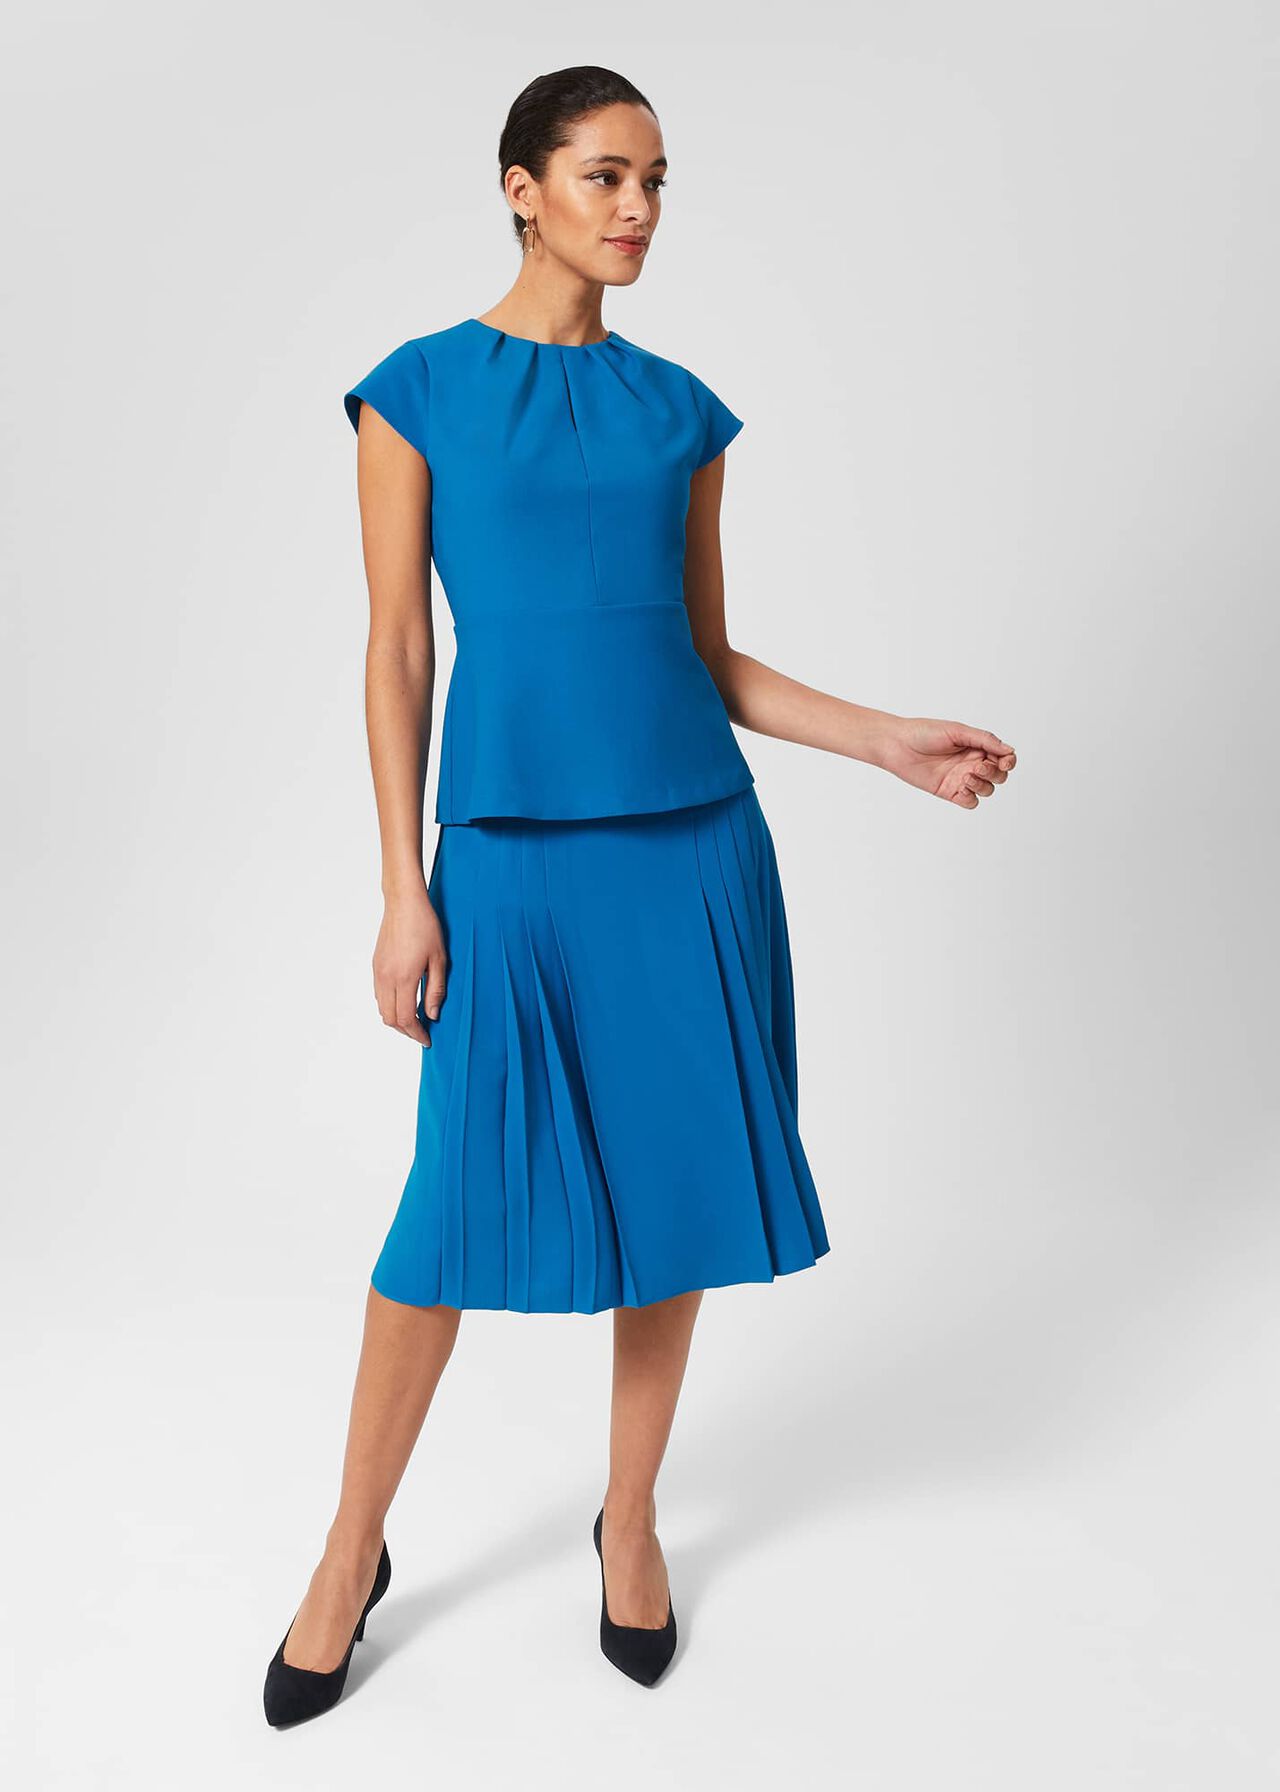 Everleigh Skirt, Imperial Blue, hi-res